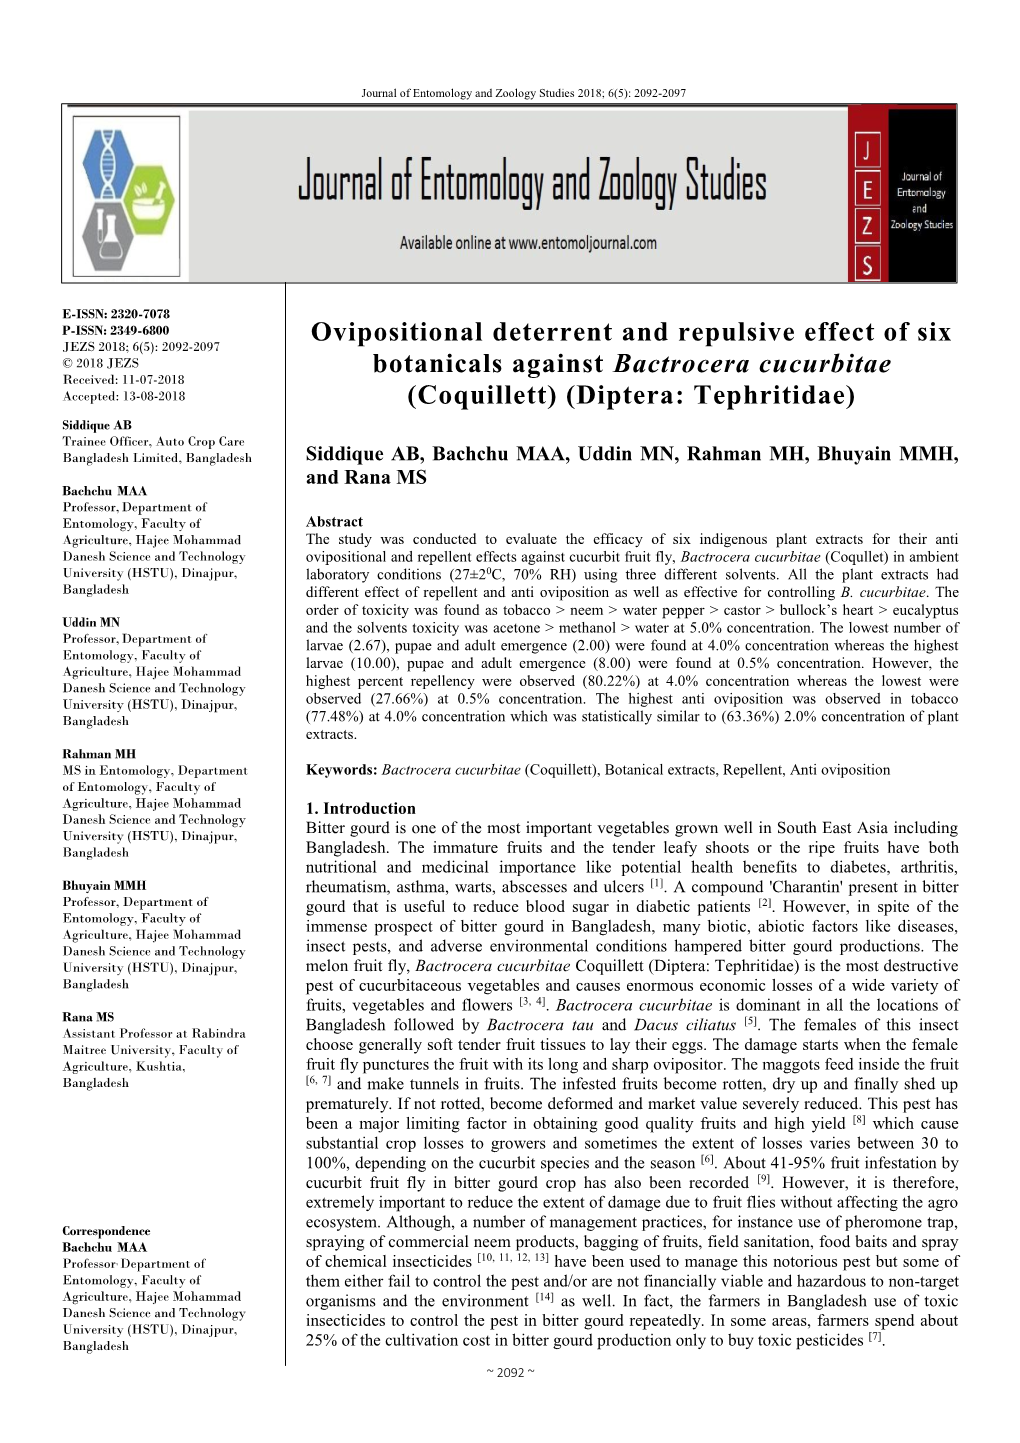 Ovipositional Deterrent and Repulsive Effect of Six Botanicals Against Bactrocera Cucurbitae (Coquillett) (Diptera: Tephritidae)